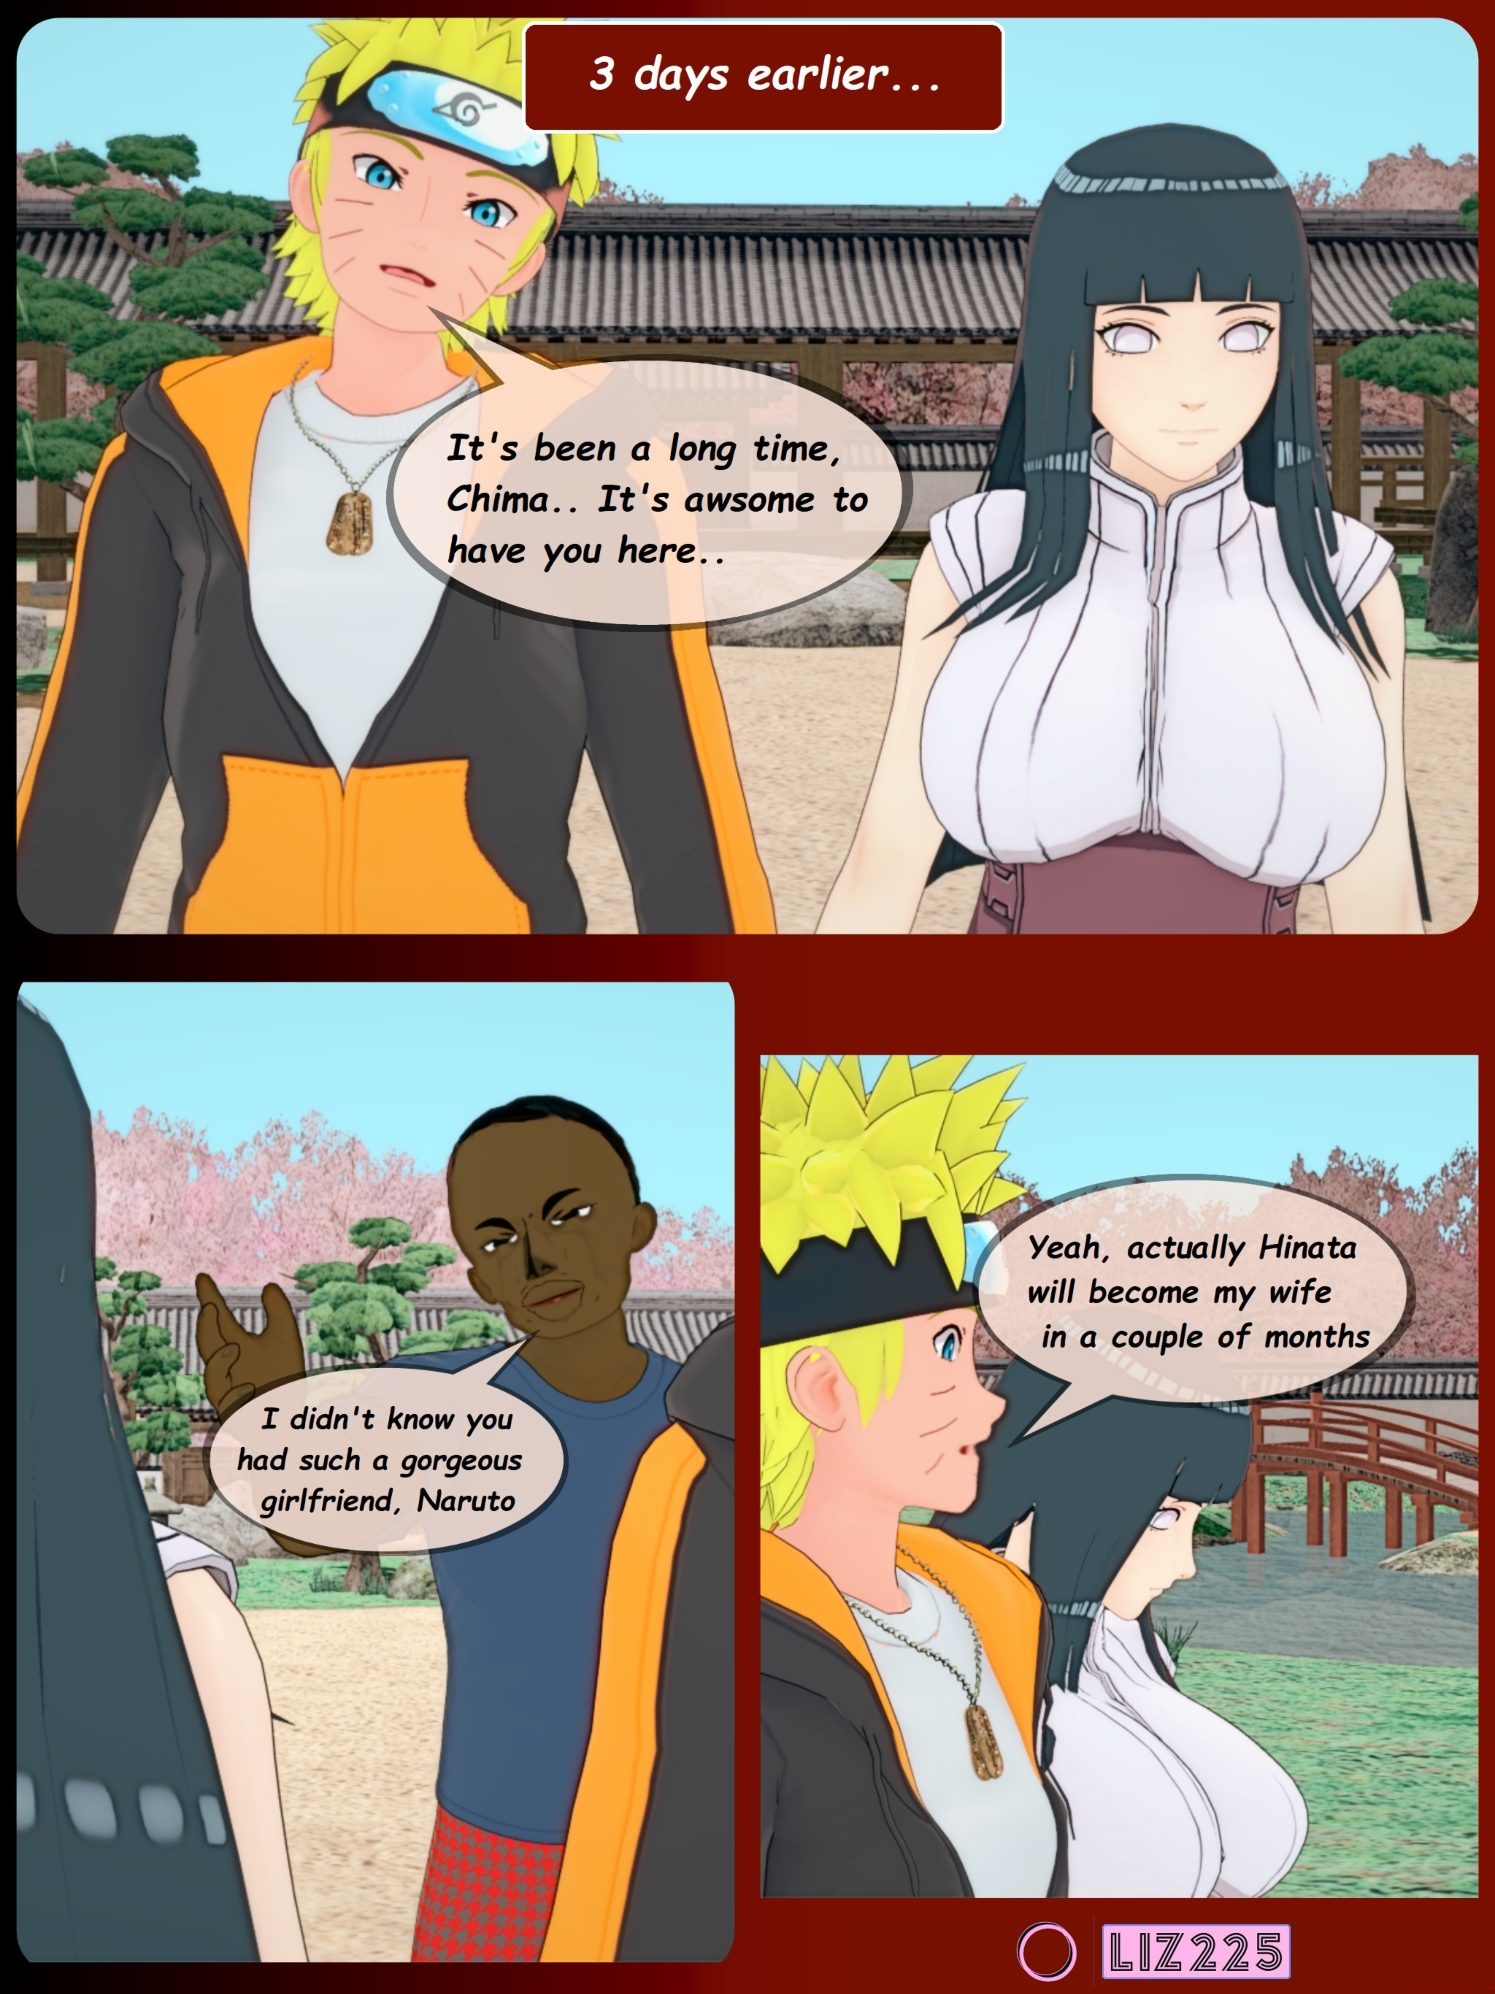 Naruto: Untold tales – Chapter 1 [LIZ225]